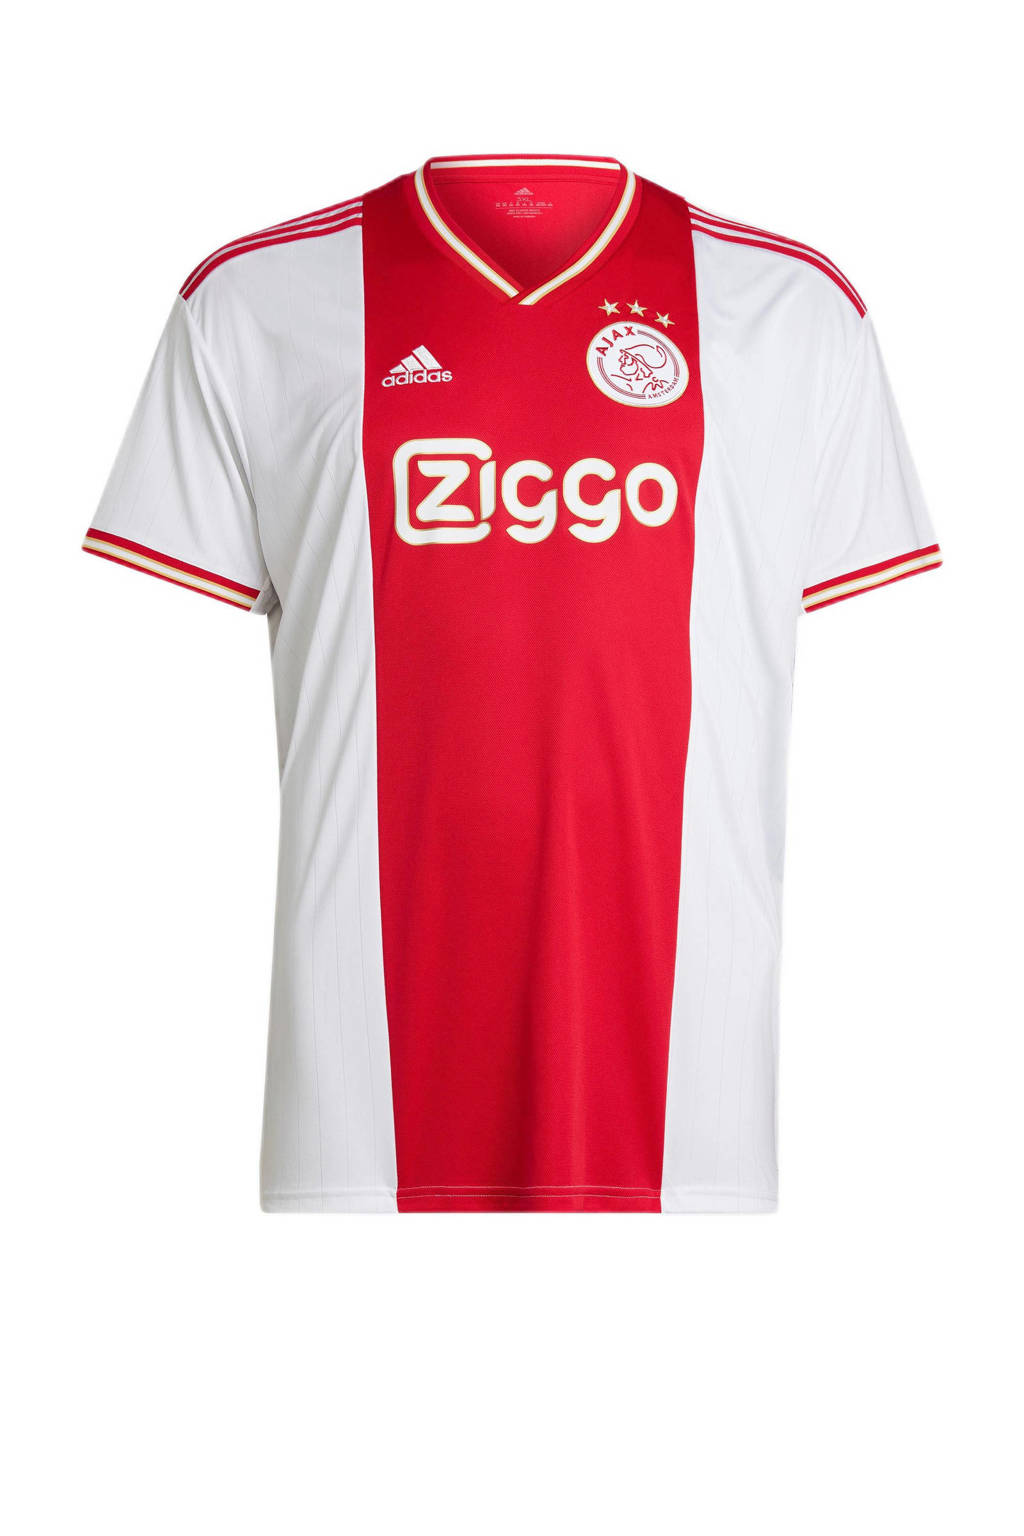 adidas Performance Senior Ajax Amsterdam voetbalshirt thuis